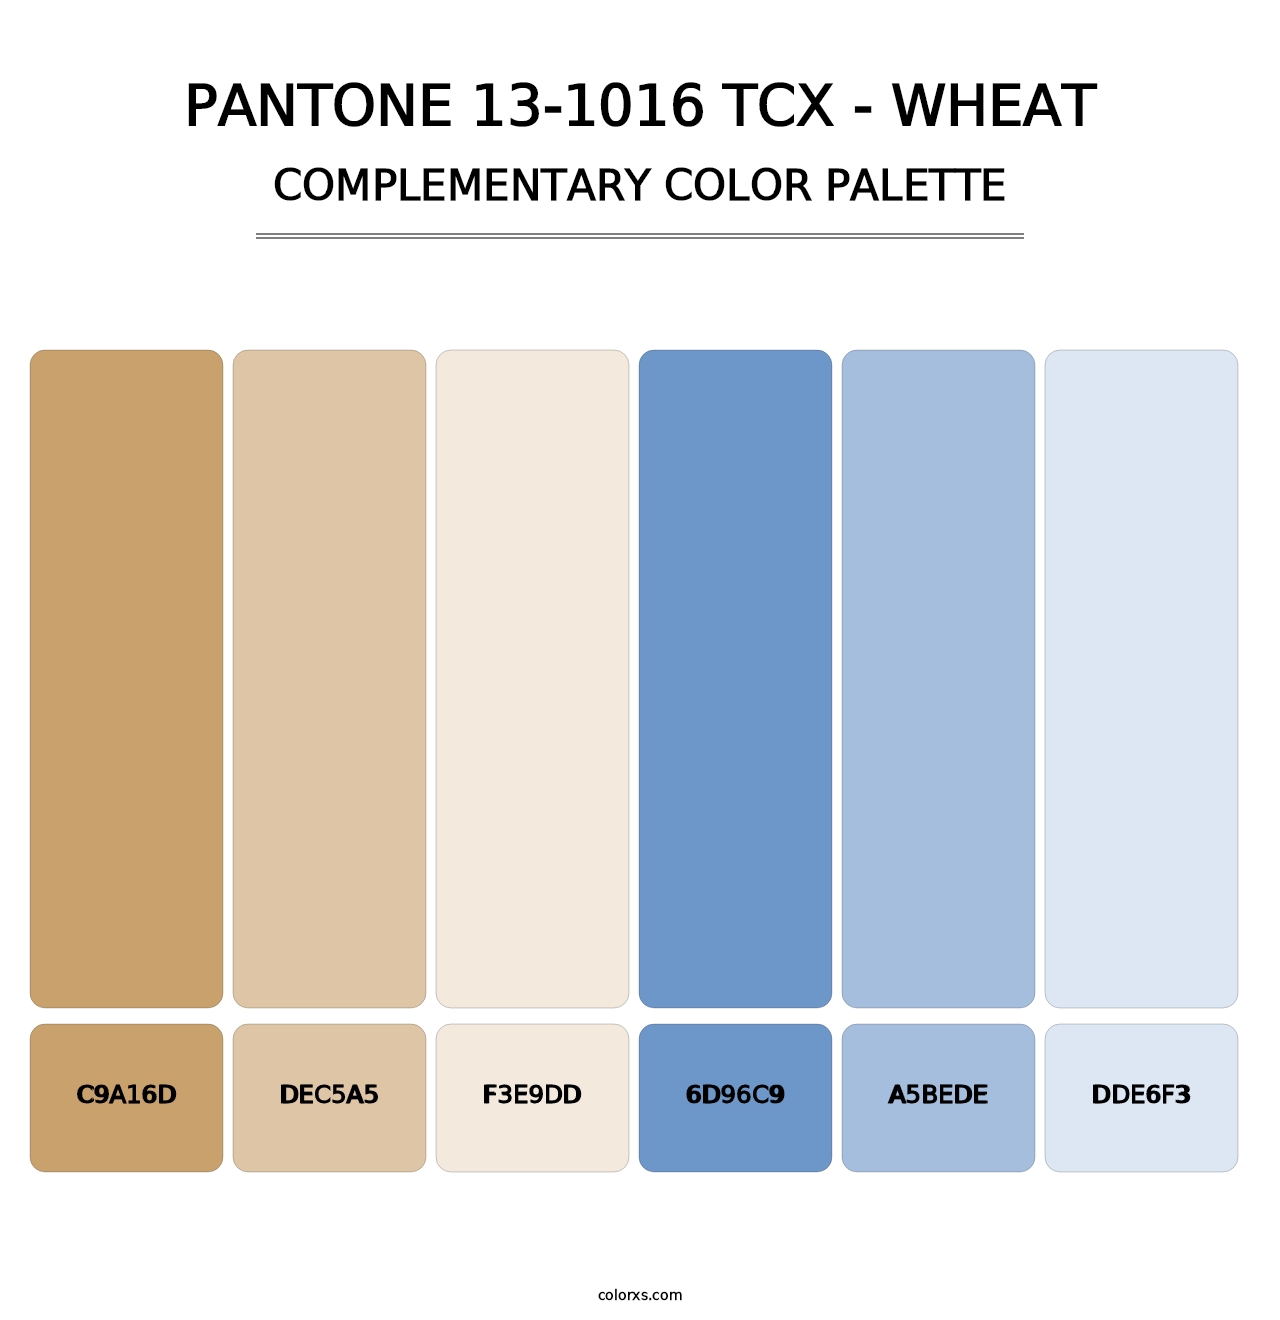 PANTONE 13-1016 TCX - Wheat - Complementary Color Palette